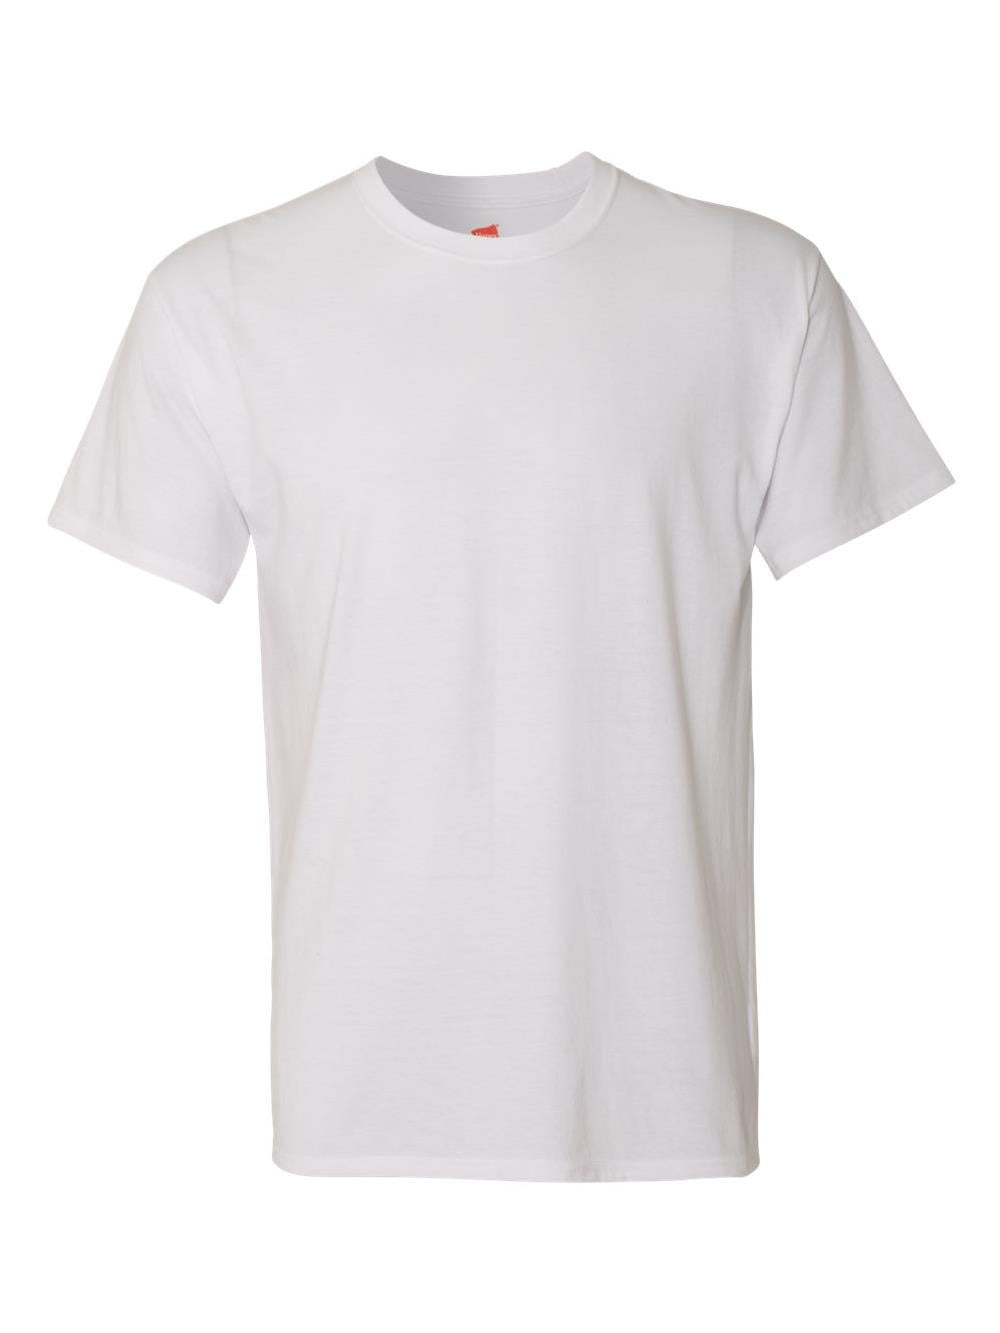 Hanes T-Shirts X-Temp? Triblend T-Shirt with Fresh IQ 42TB - Walmart.com